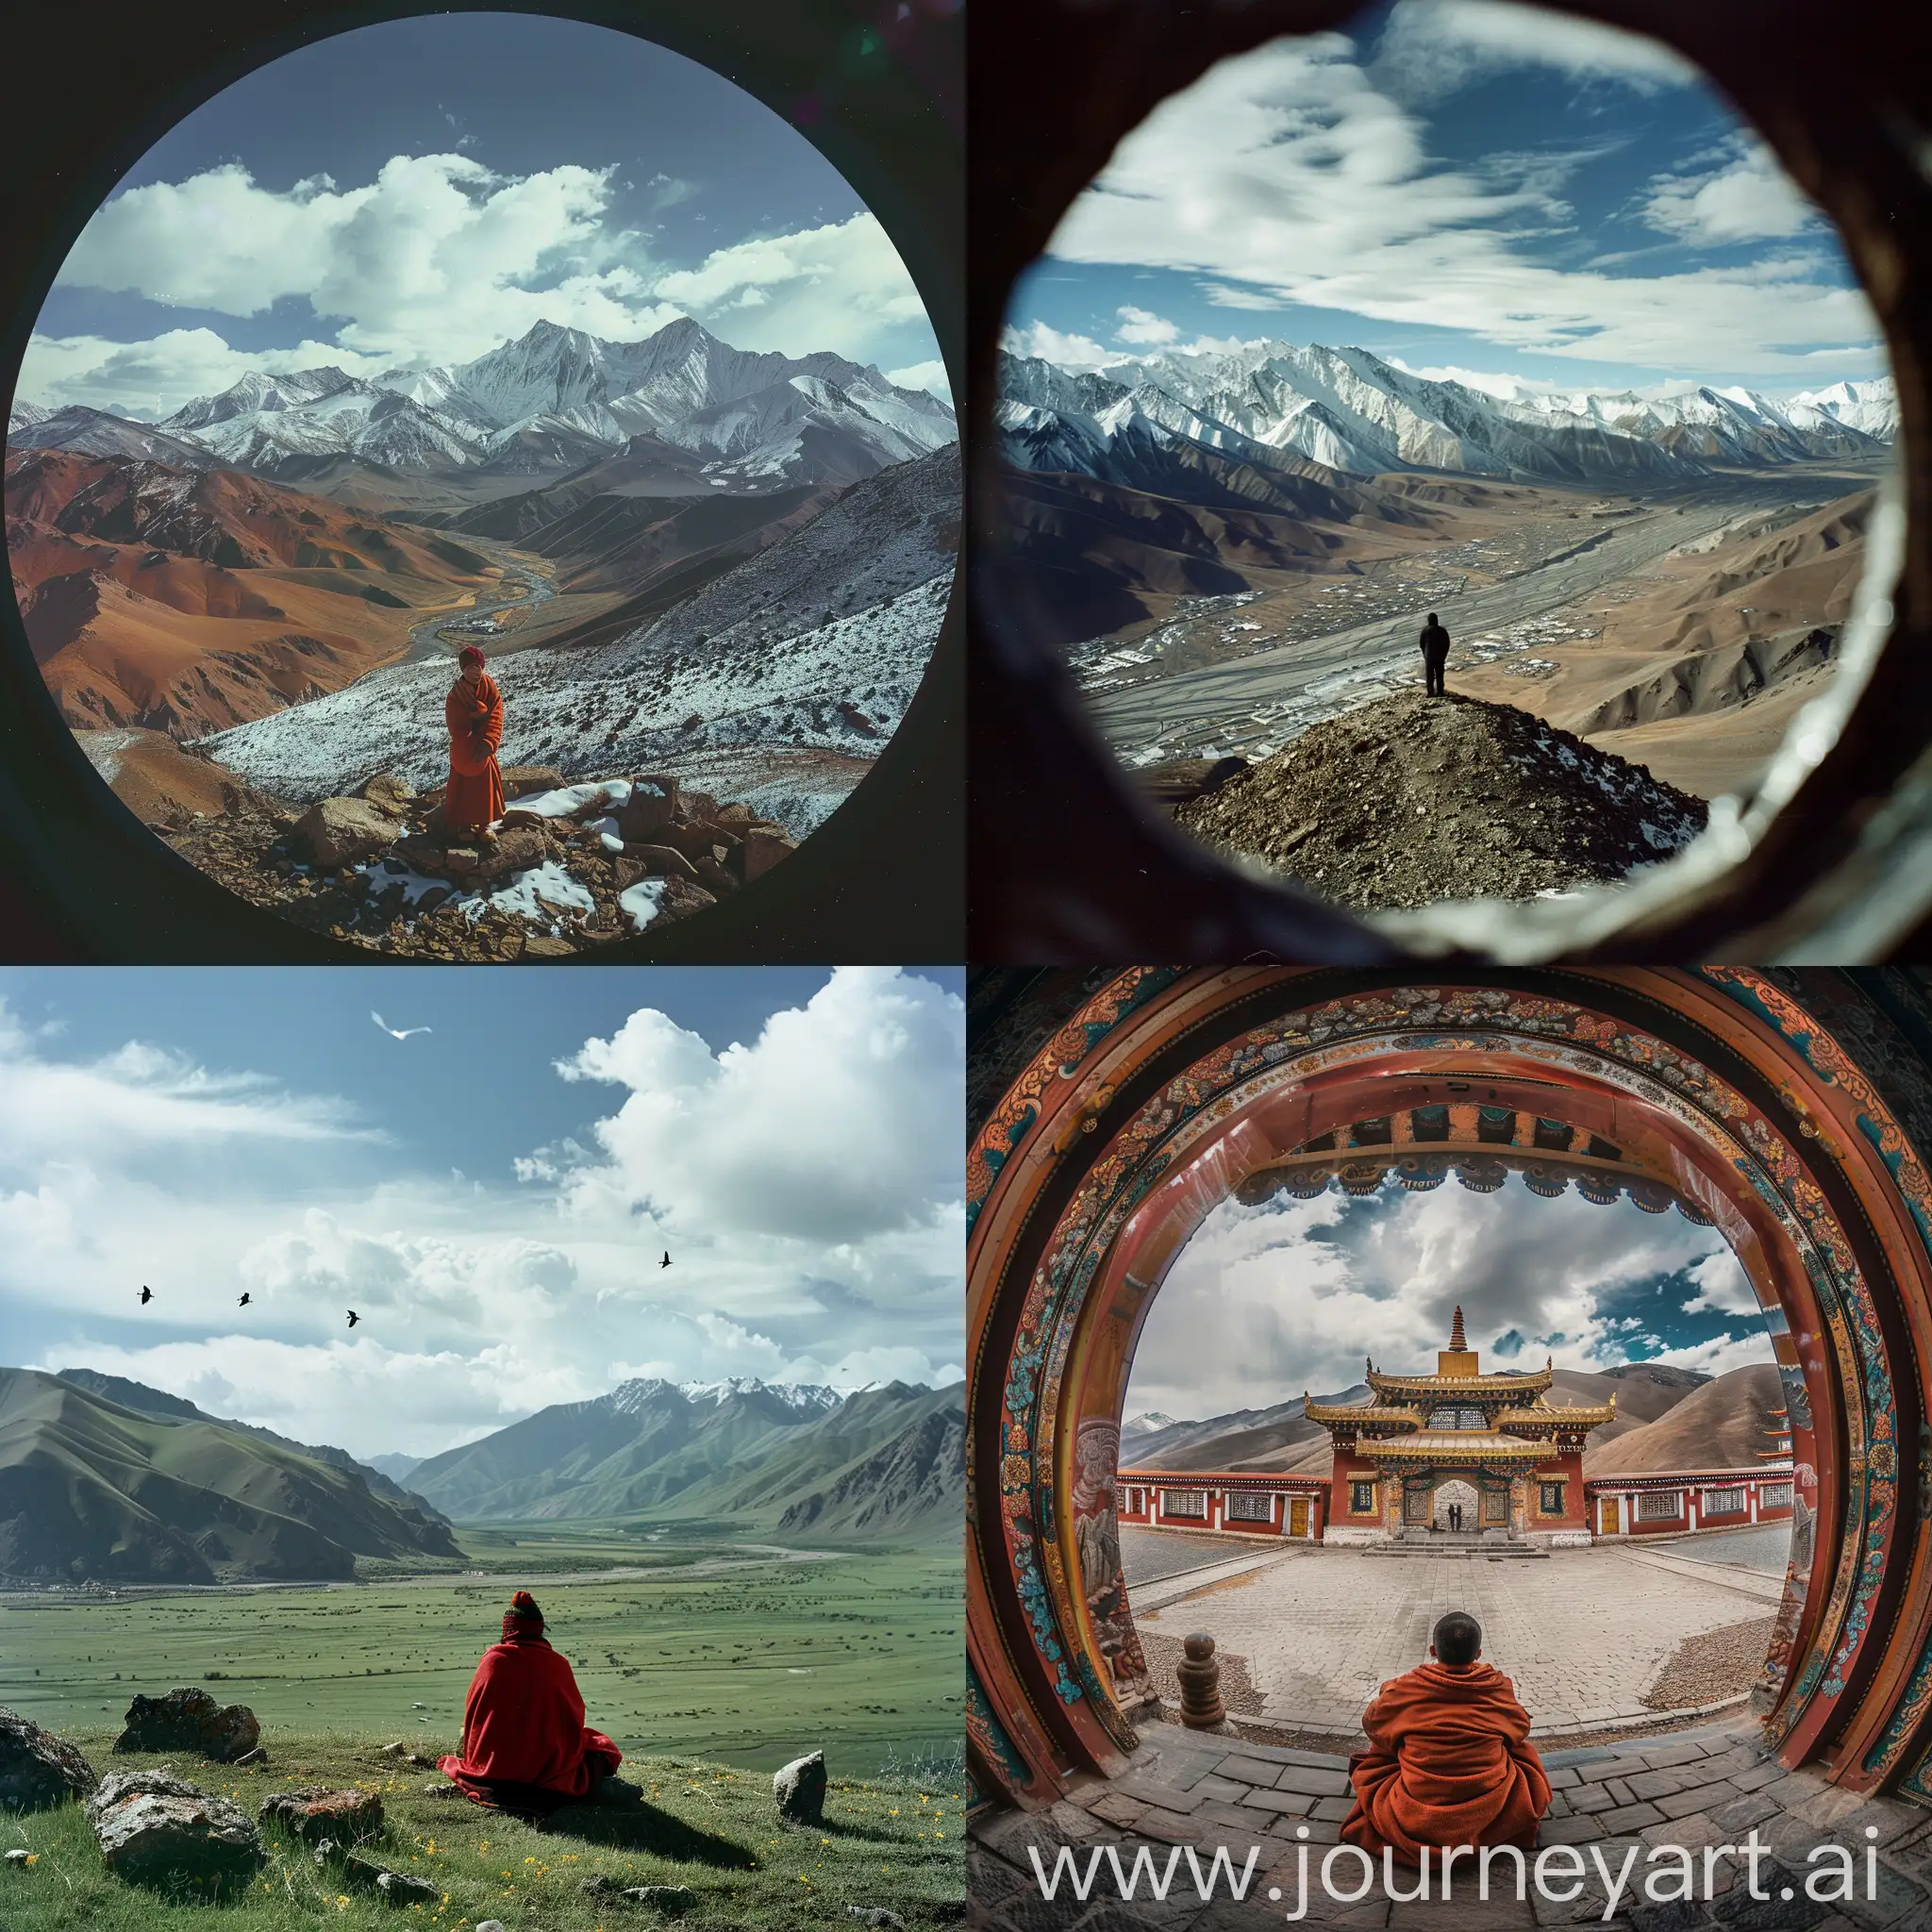 BirdsEye-View-of-Tibet-Landscape-with-Figures